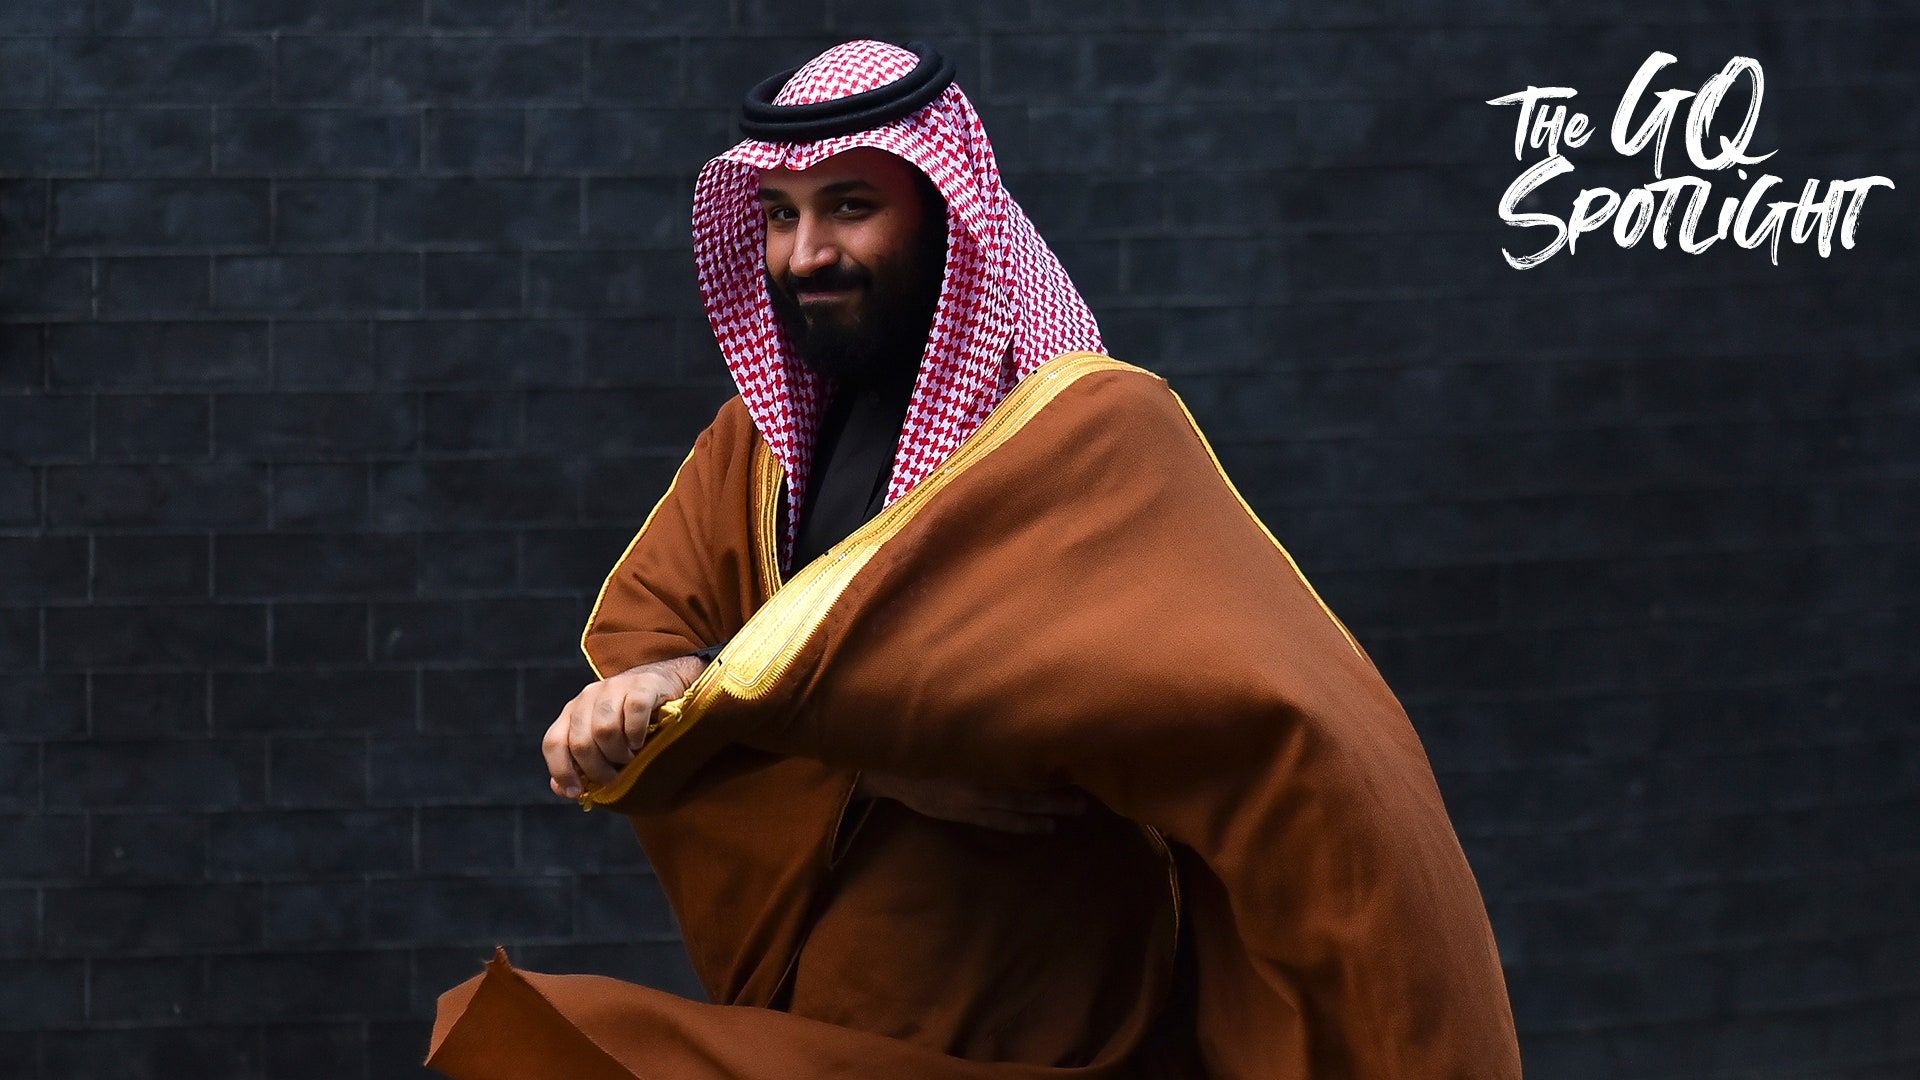 Crown prince Mohammed Bin Salman: Inside the stricken court